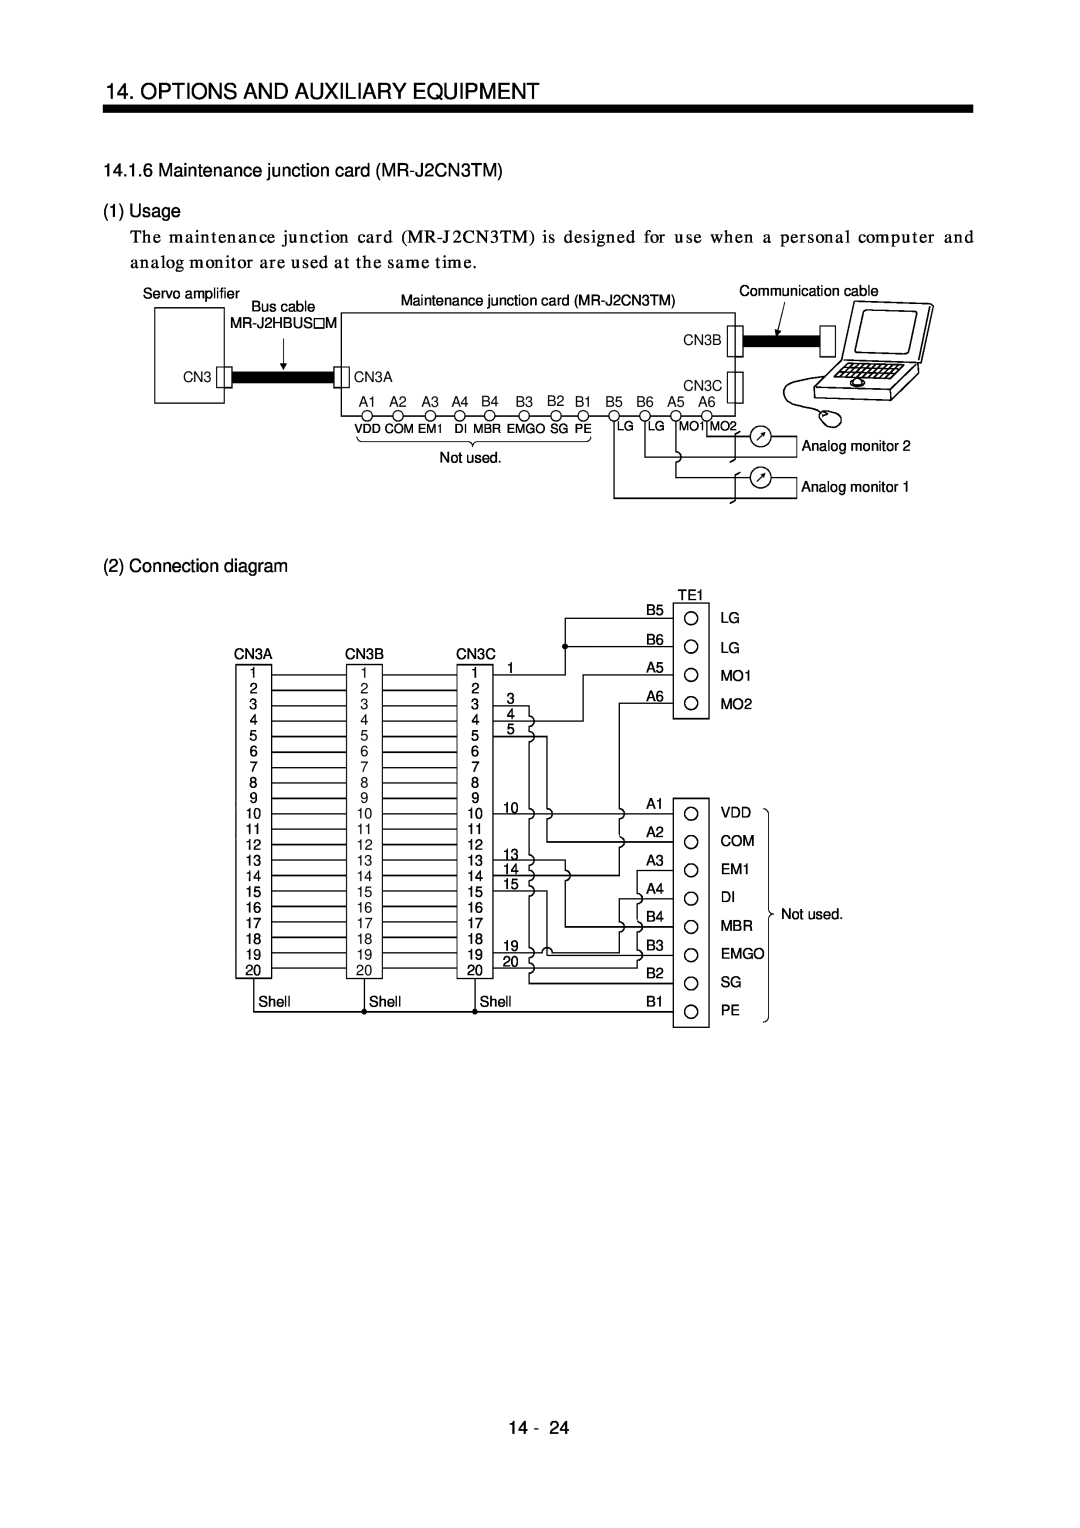 Mitsubishi Electronics MR-J2S- CL specifications Maintenance junction card MR-J2CN3TM, 1Usage, Connection diagram, 14 